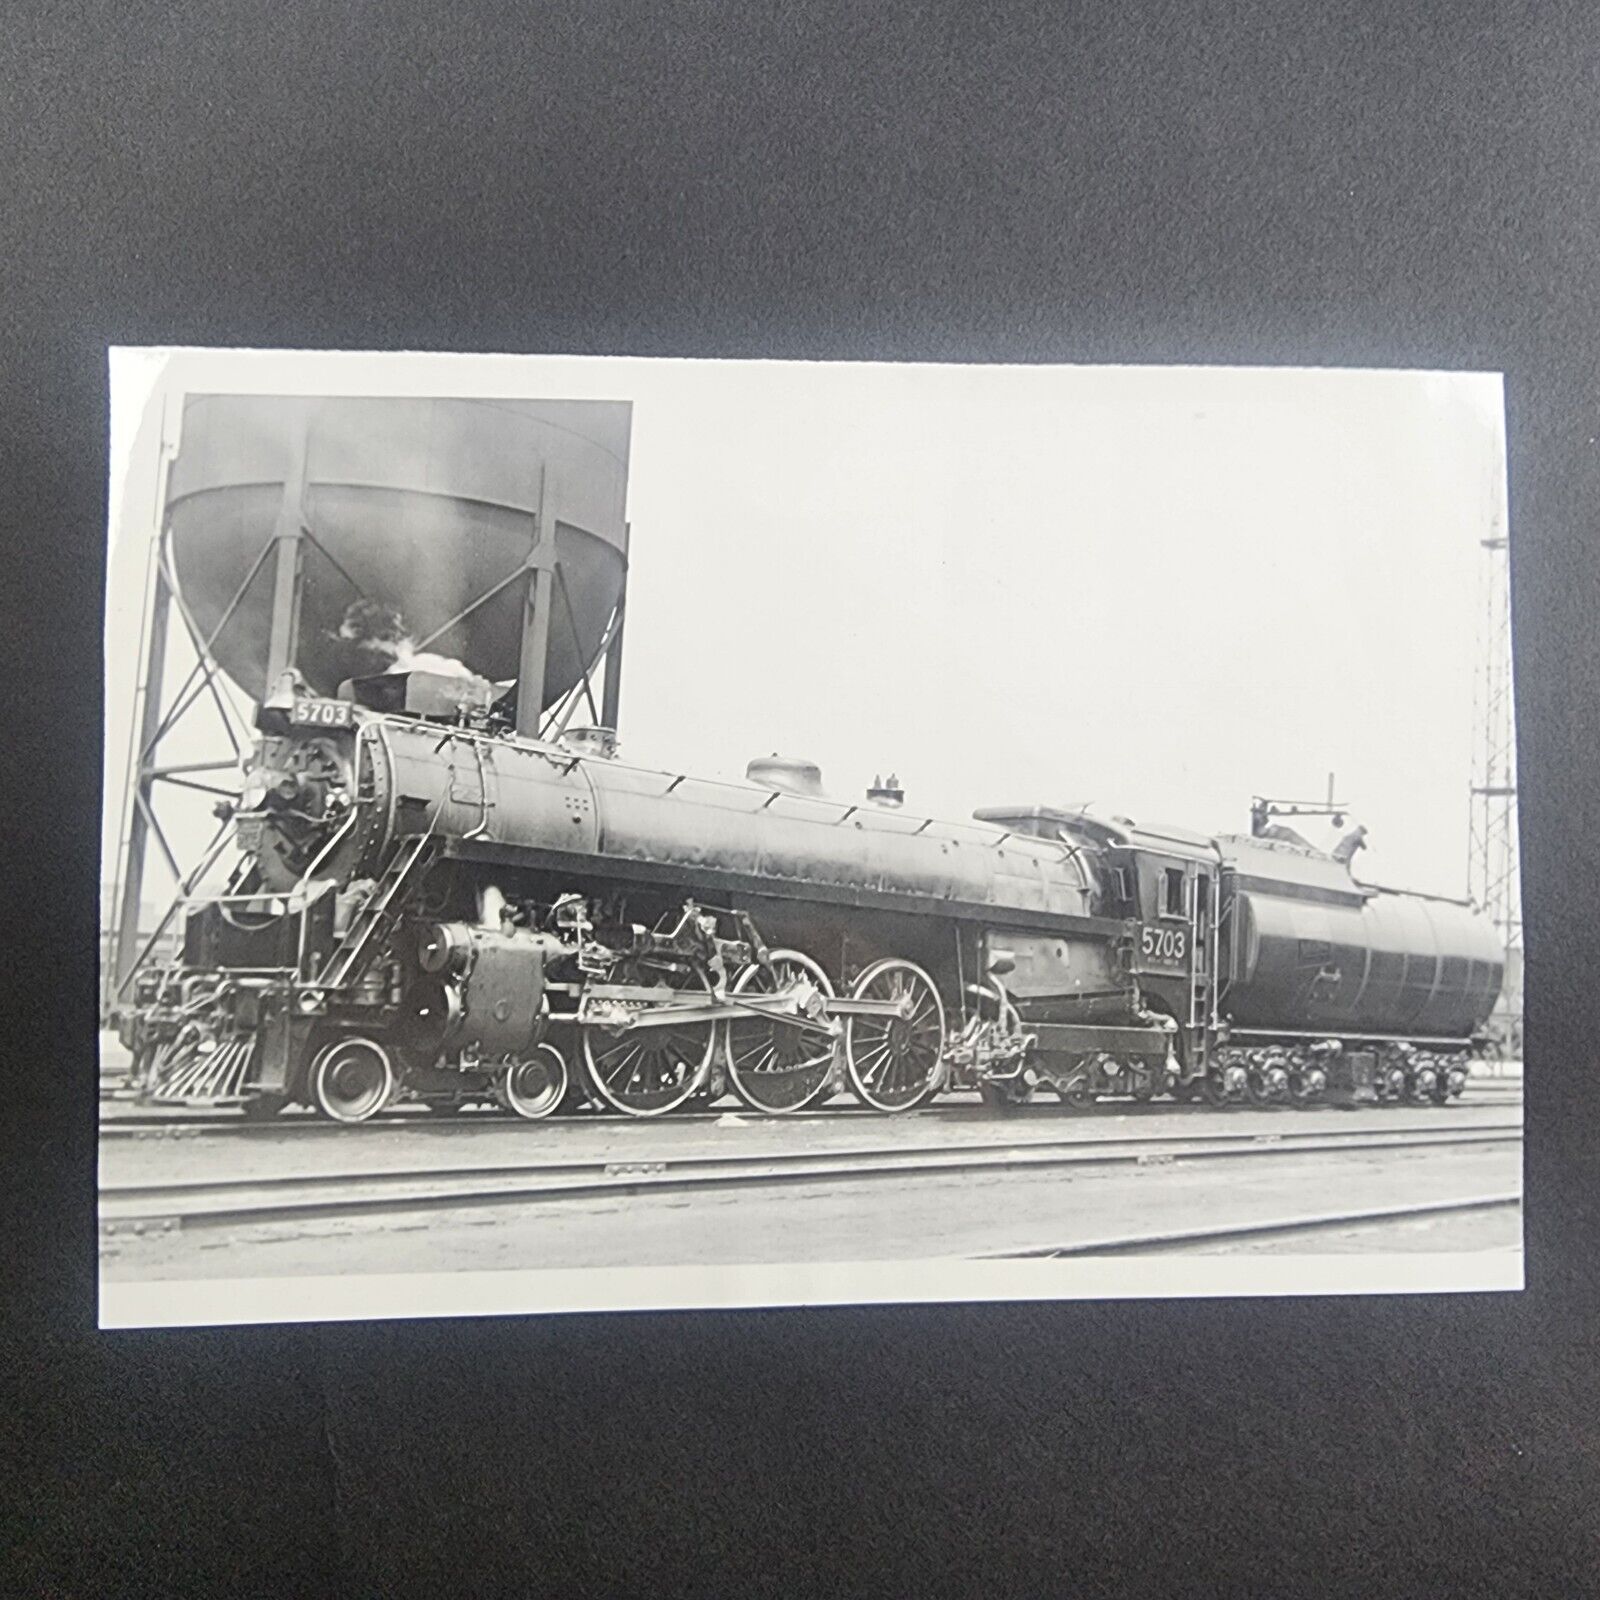 Vintage Steam Locomotive Photo by HK VOLLRATH, Toronto May 1939, CNR 5703, 4-6-4